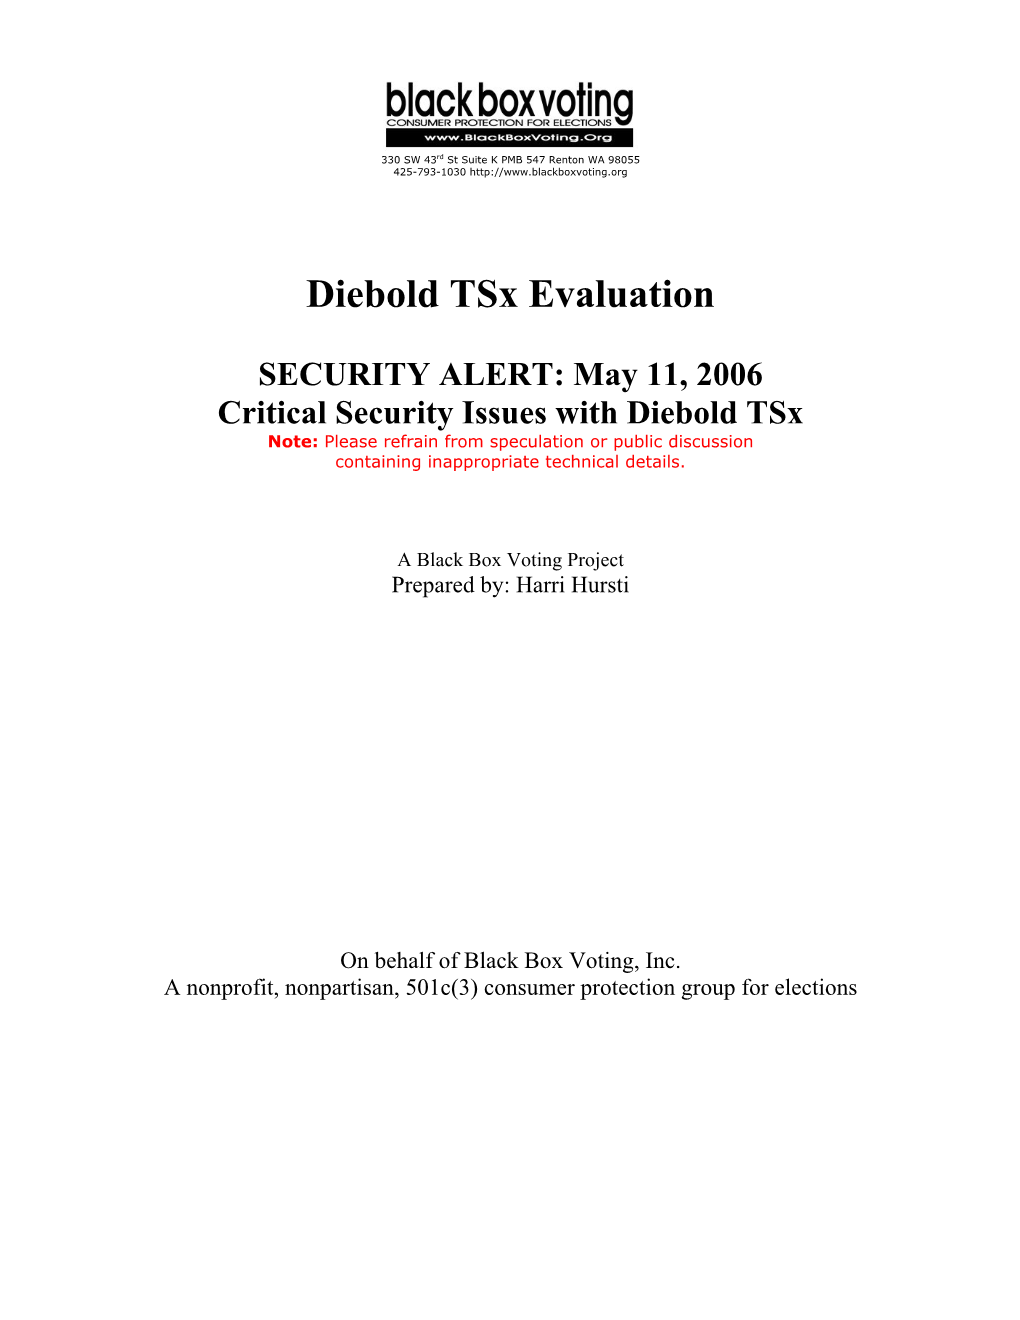 Diebold Tsx Evaluation, SECURITY ALERT